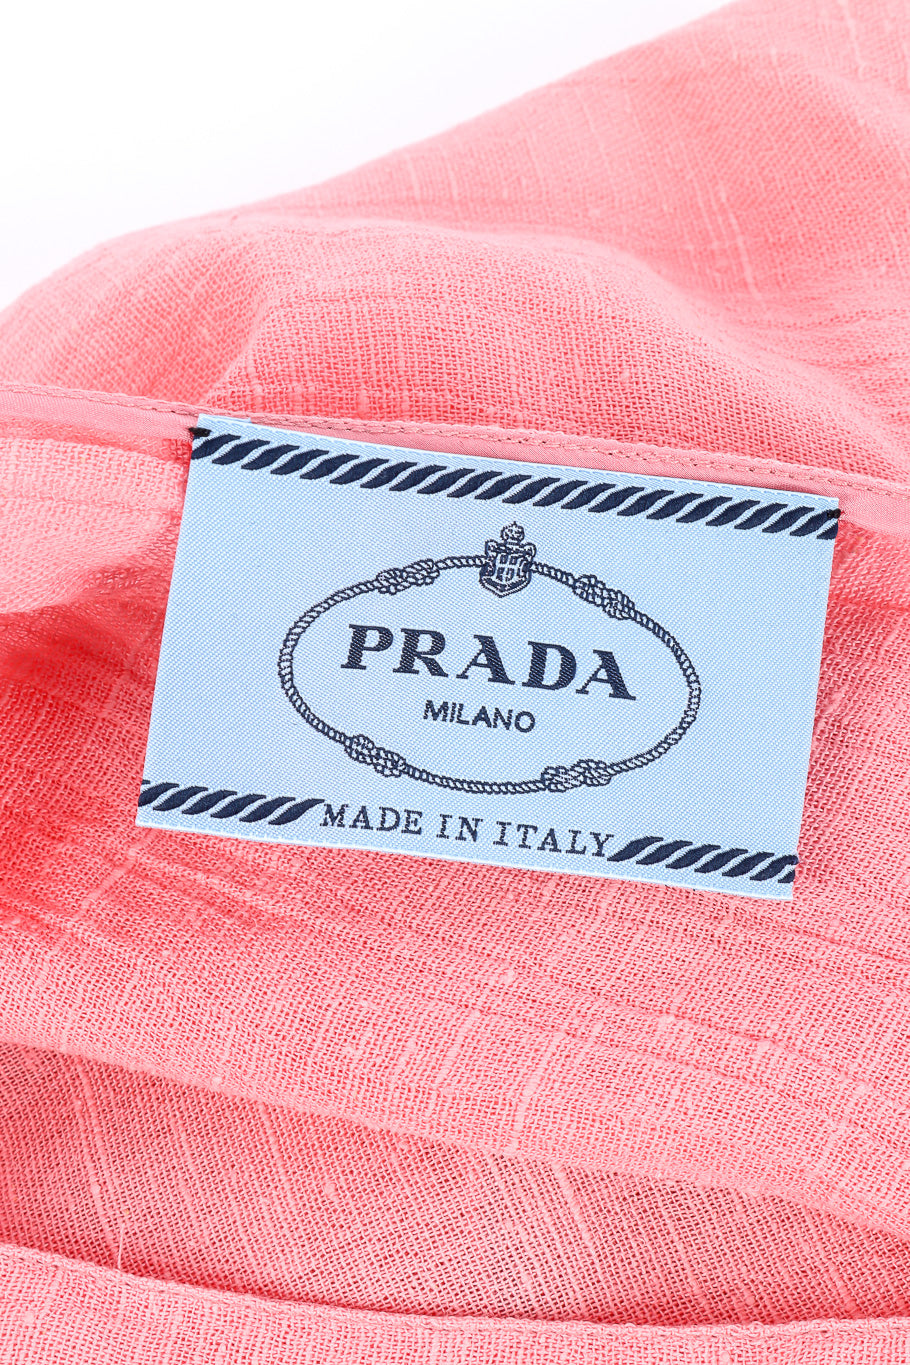 Prada sequin midi dress designer label on dress @recessla